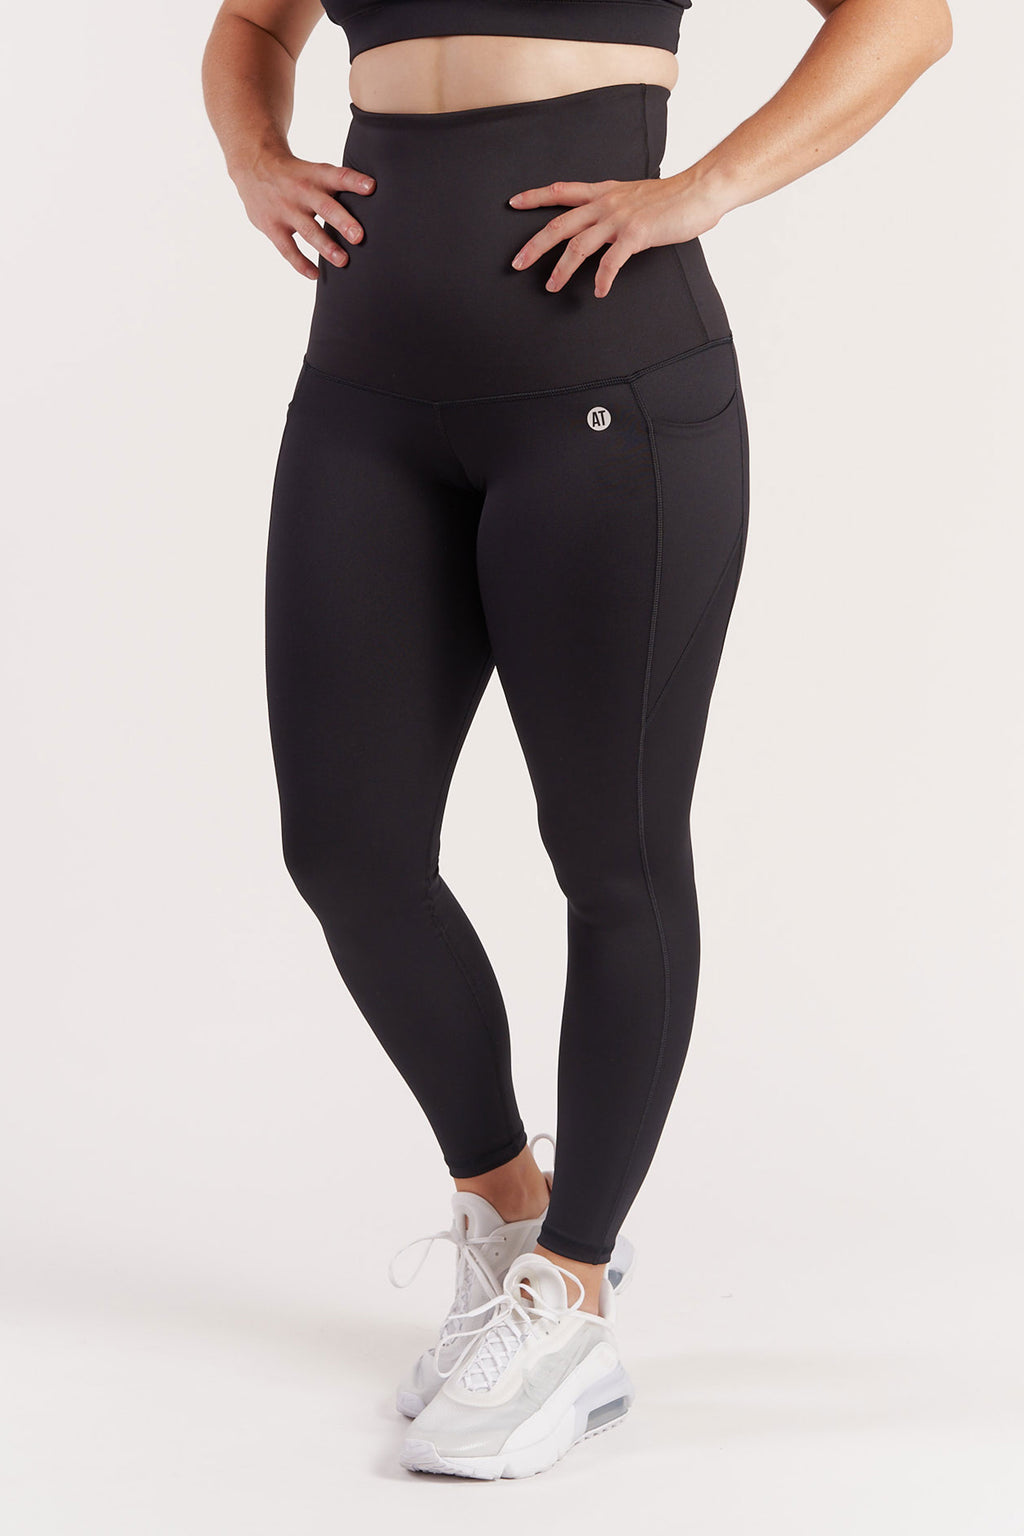 postnatal-recovery-pocket-tights-full-length-black-large-front
